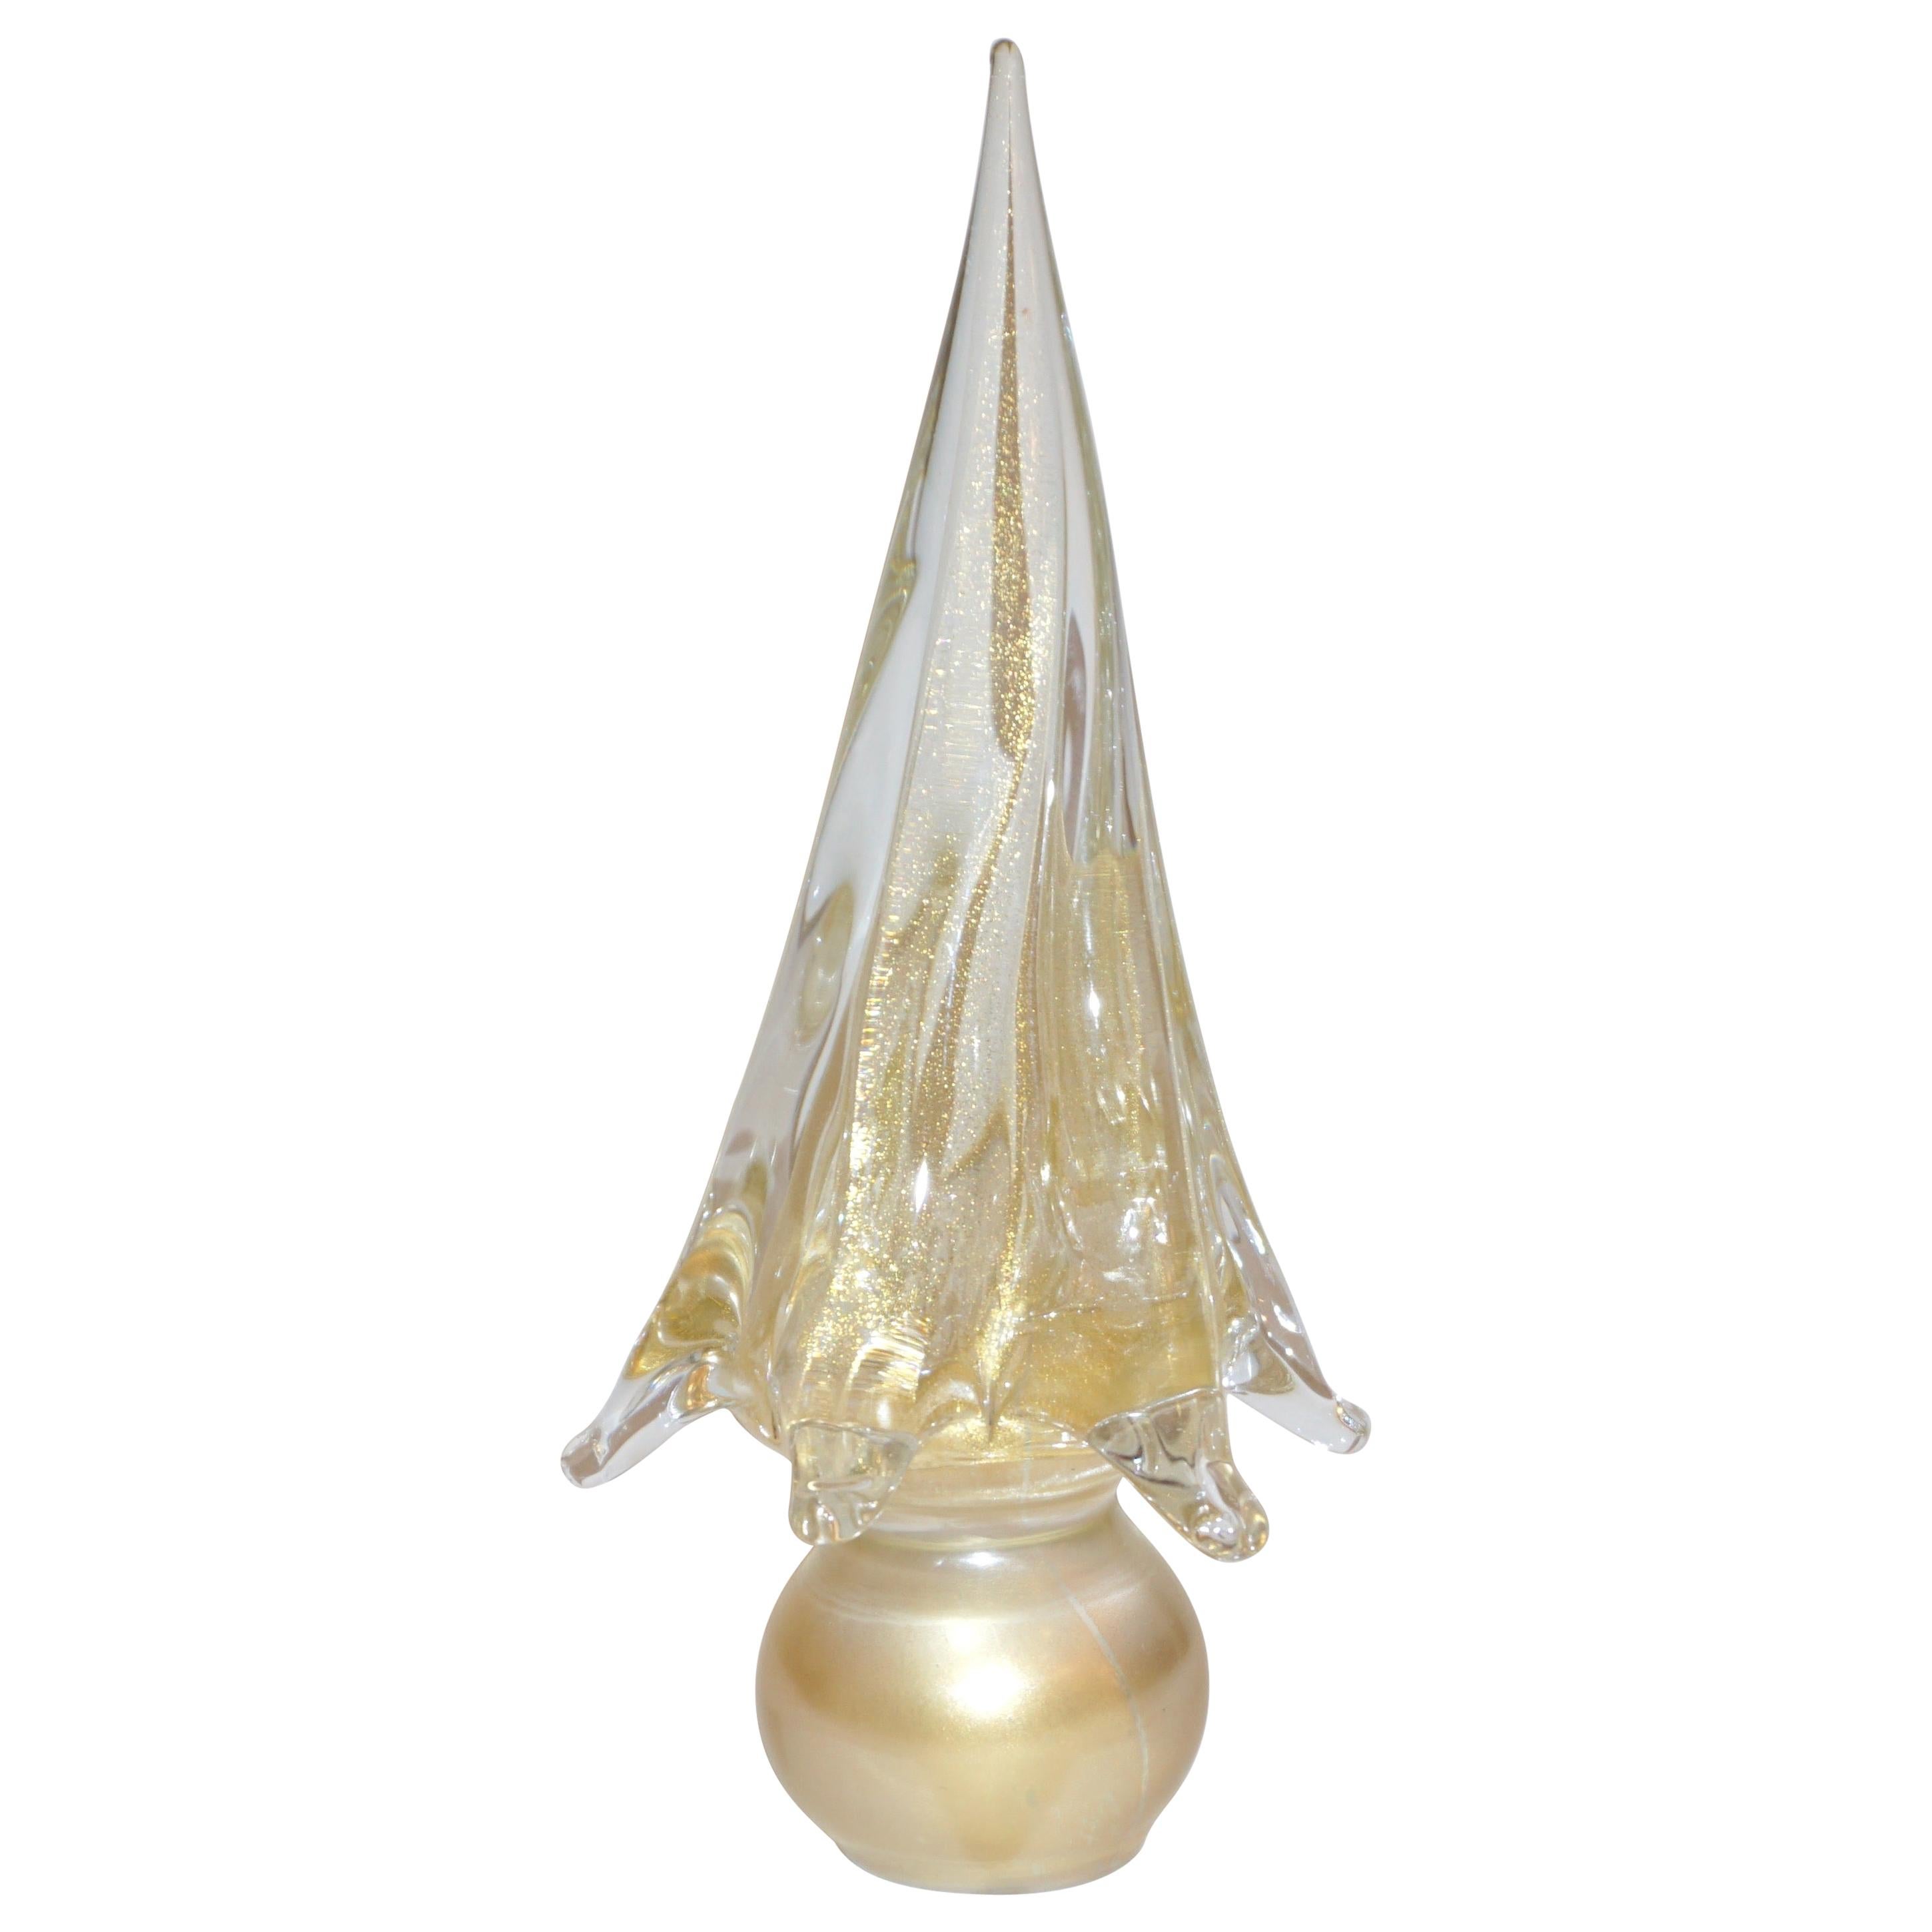 Formia Italian Vintage 24-Karat Gold Dust Murano Glass Christmas Tree Sculpture